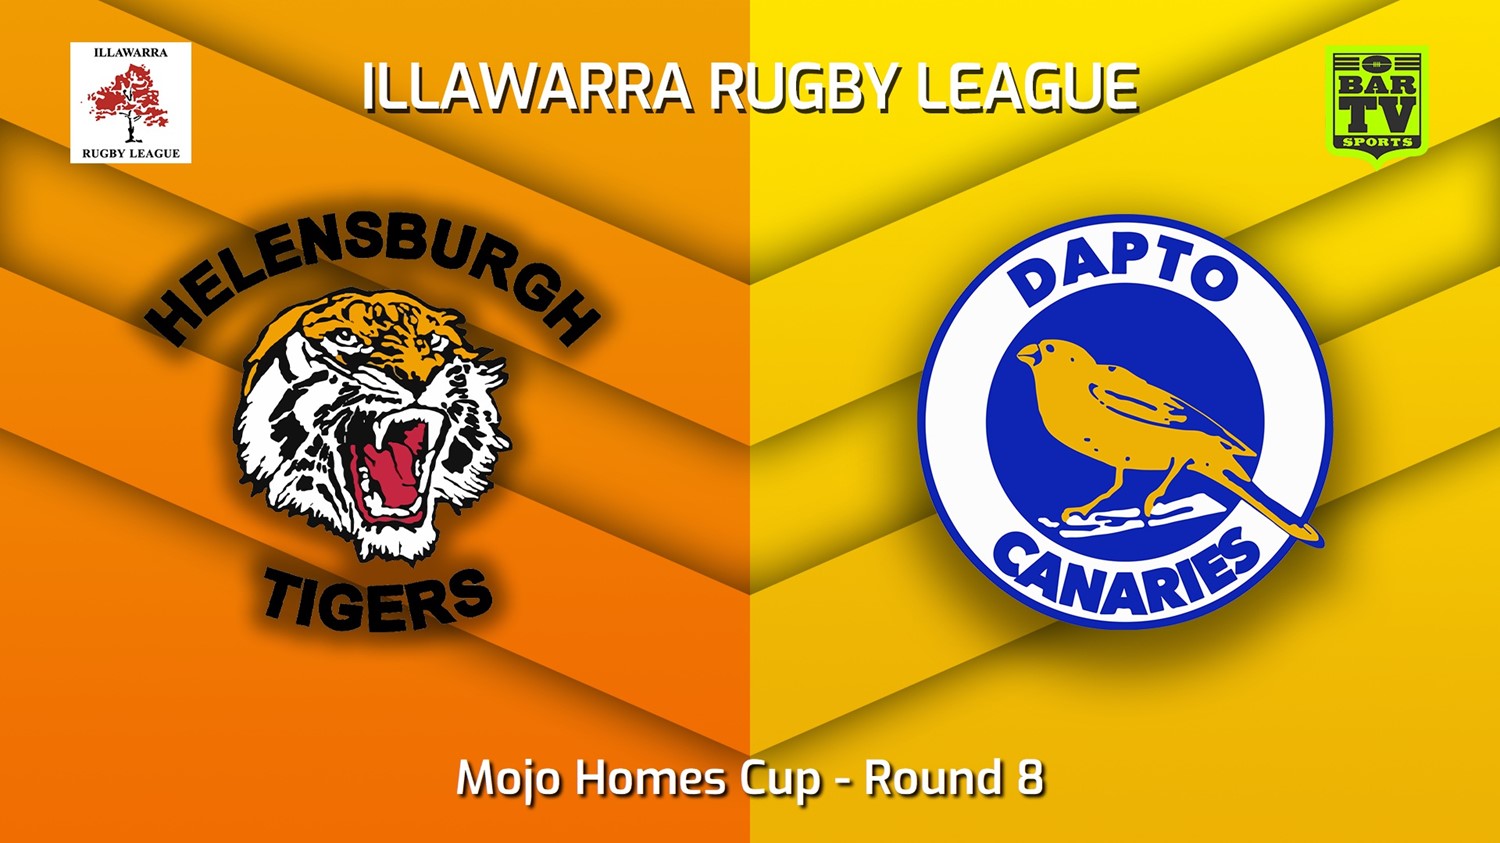 220625-Illawarra Round 8 - Mojo Homes Cup - Helensburgh Tigers v Dapto Canaries Slate Image